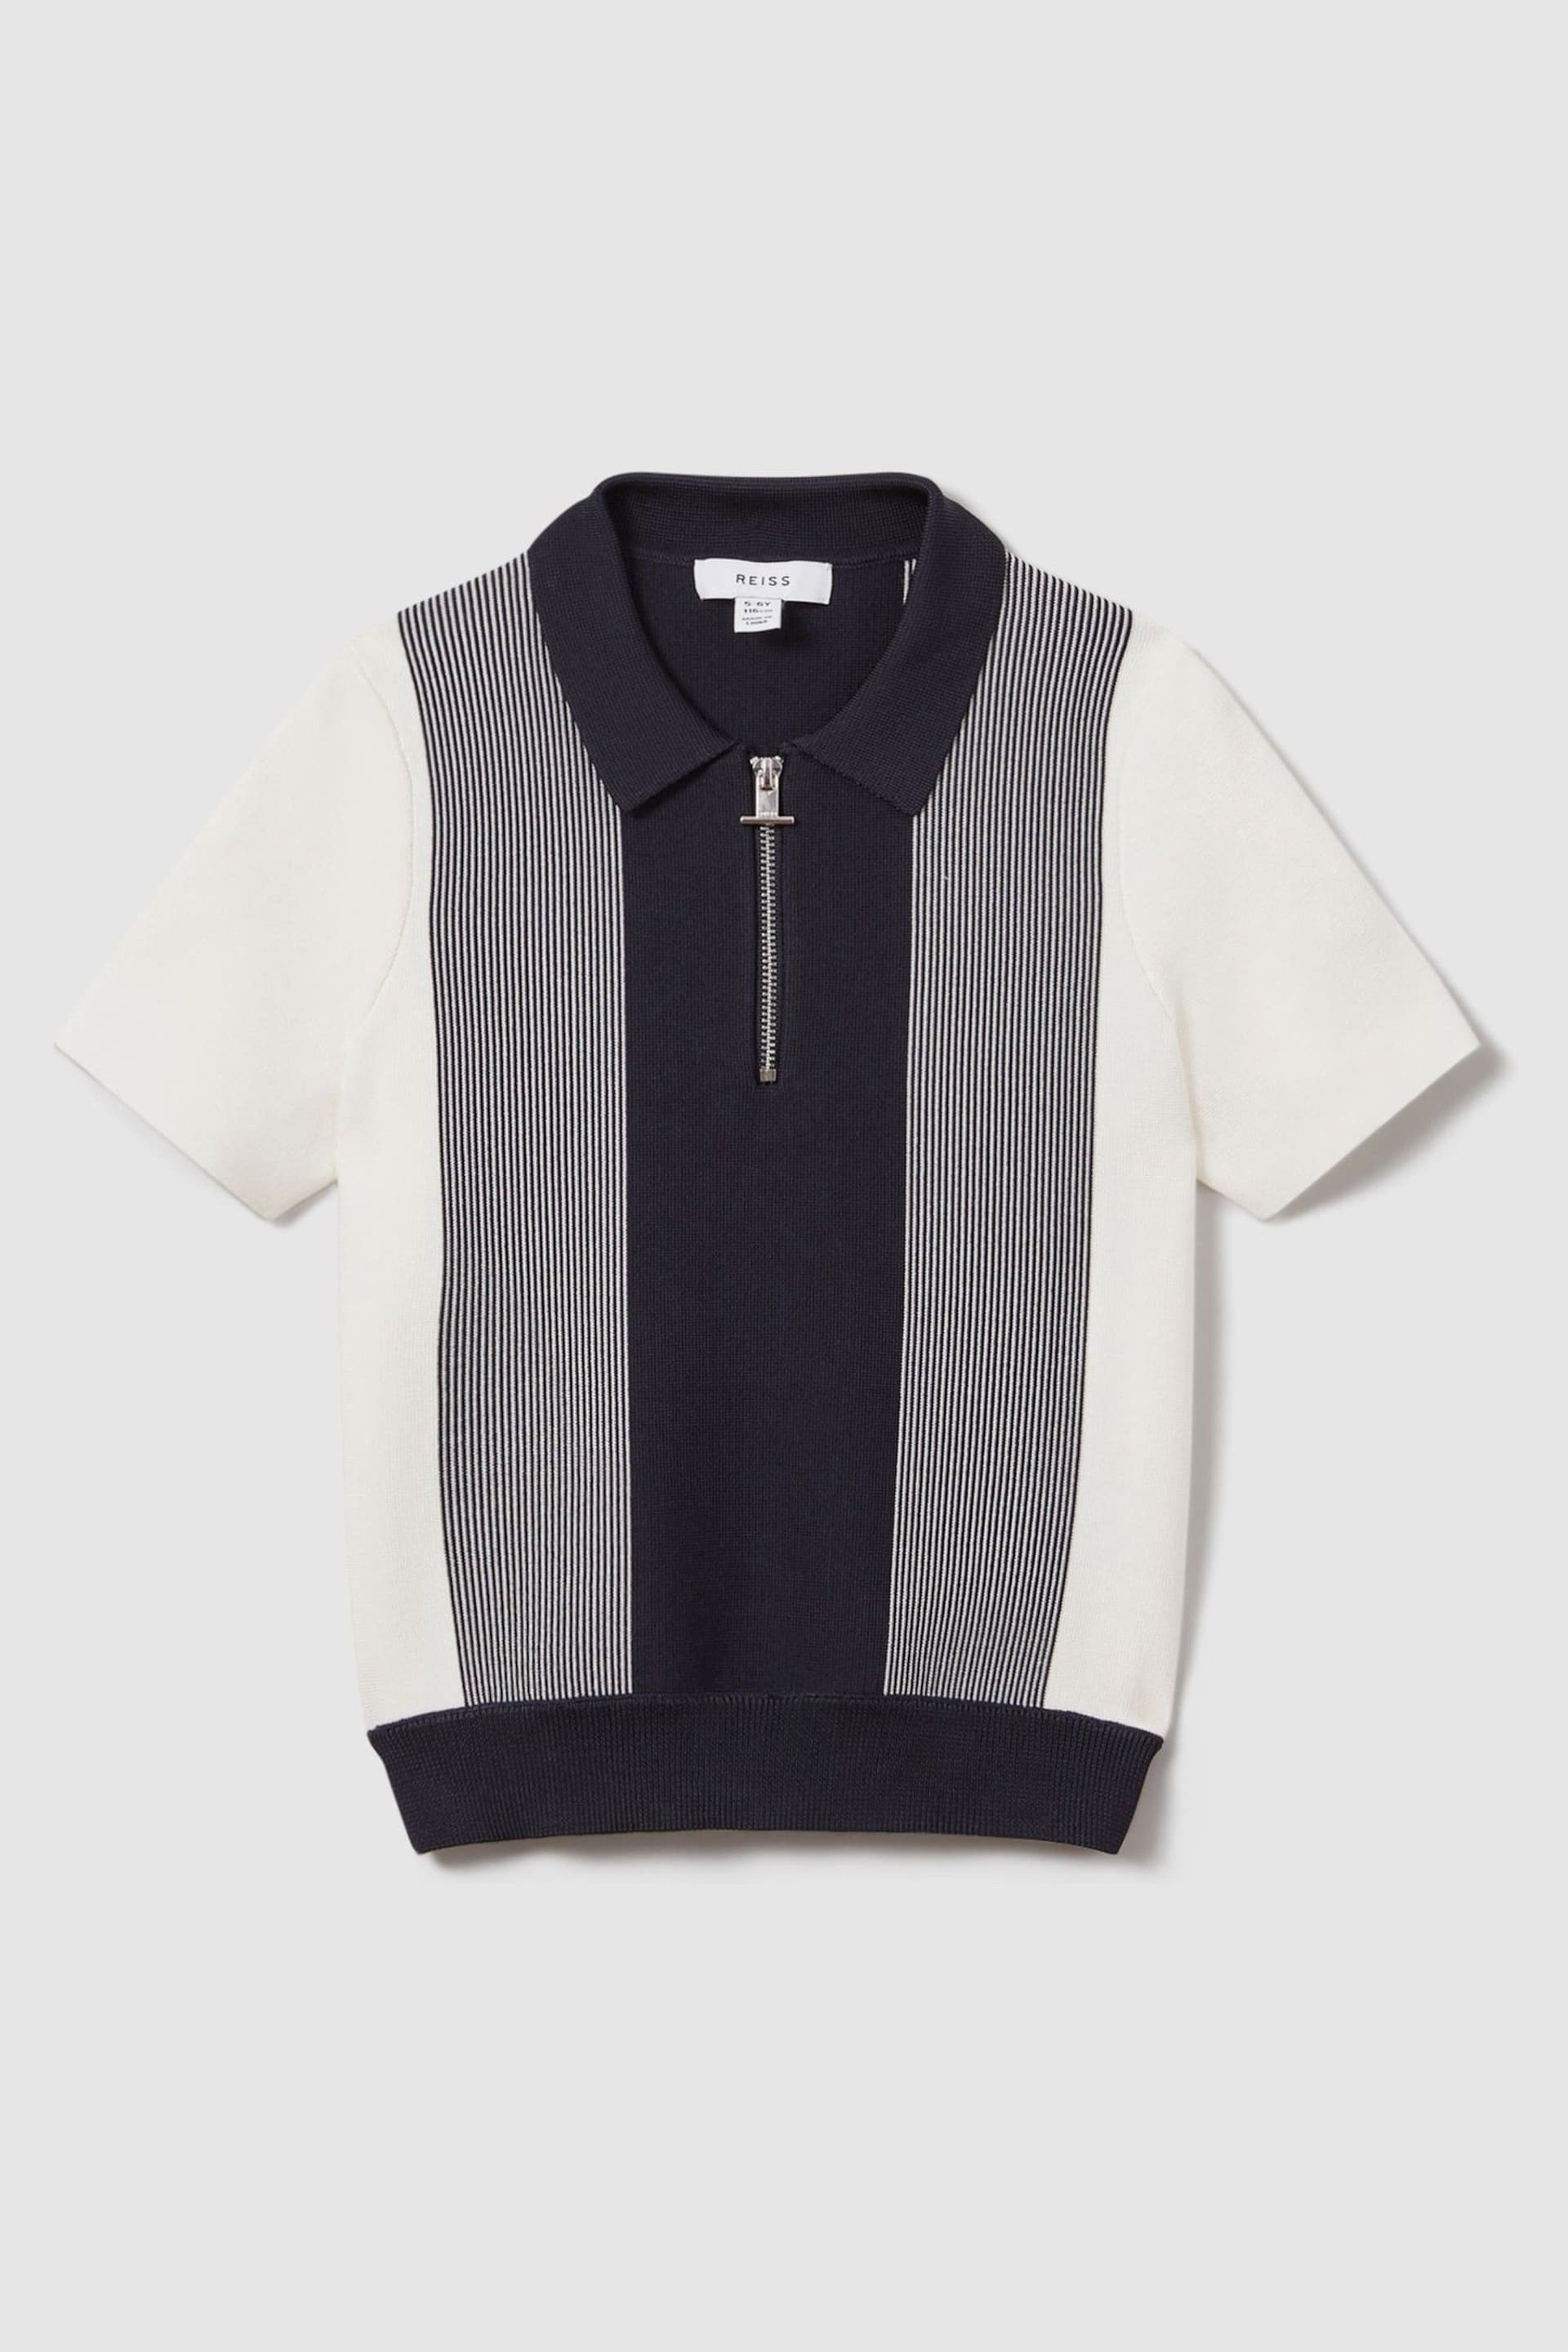 Reiss Navy Milton Junior Half-Zip Striped Polo Shirt - Image 2 of 4